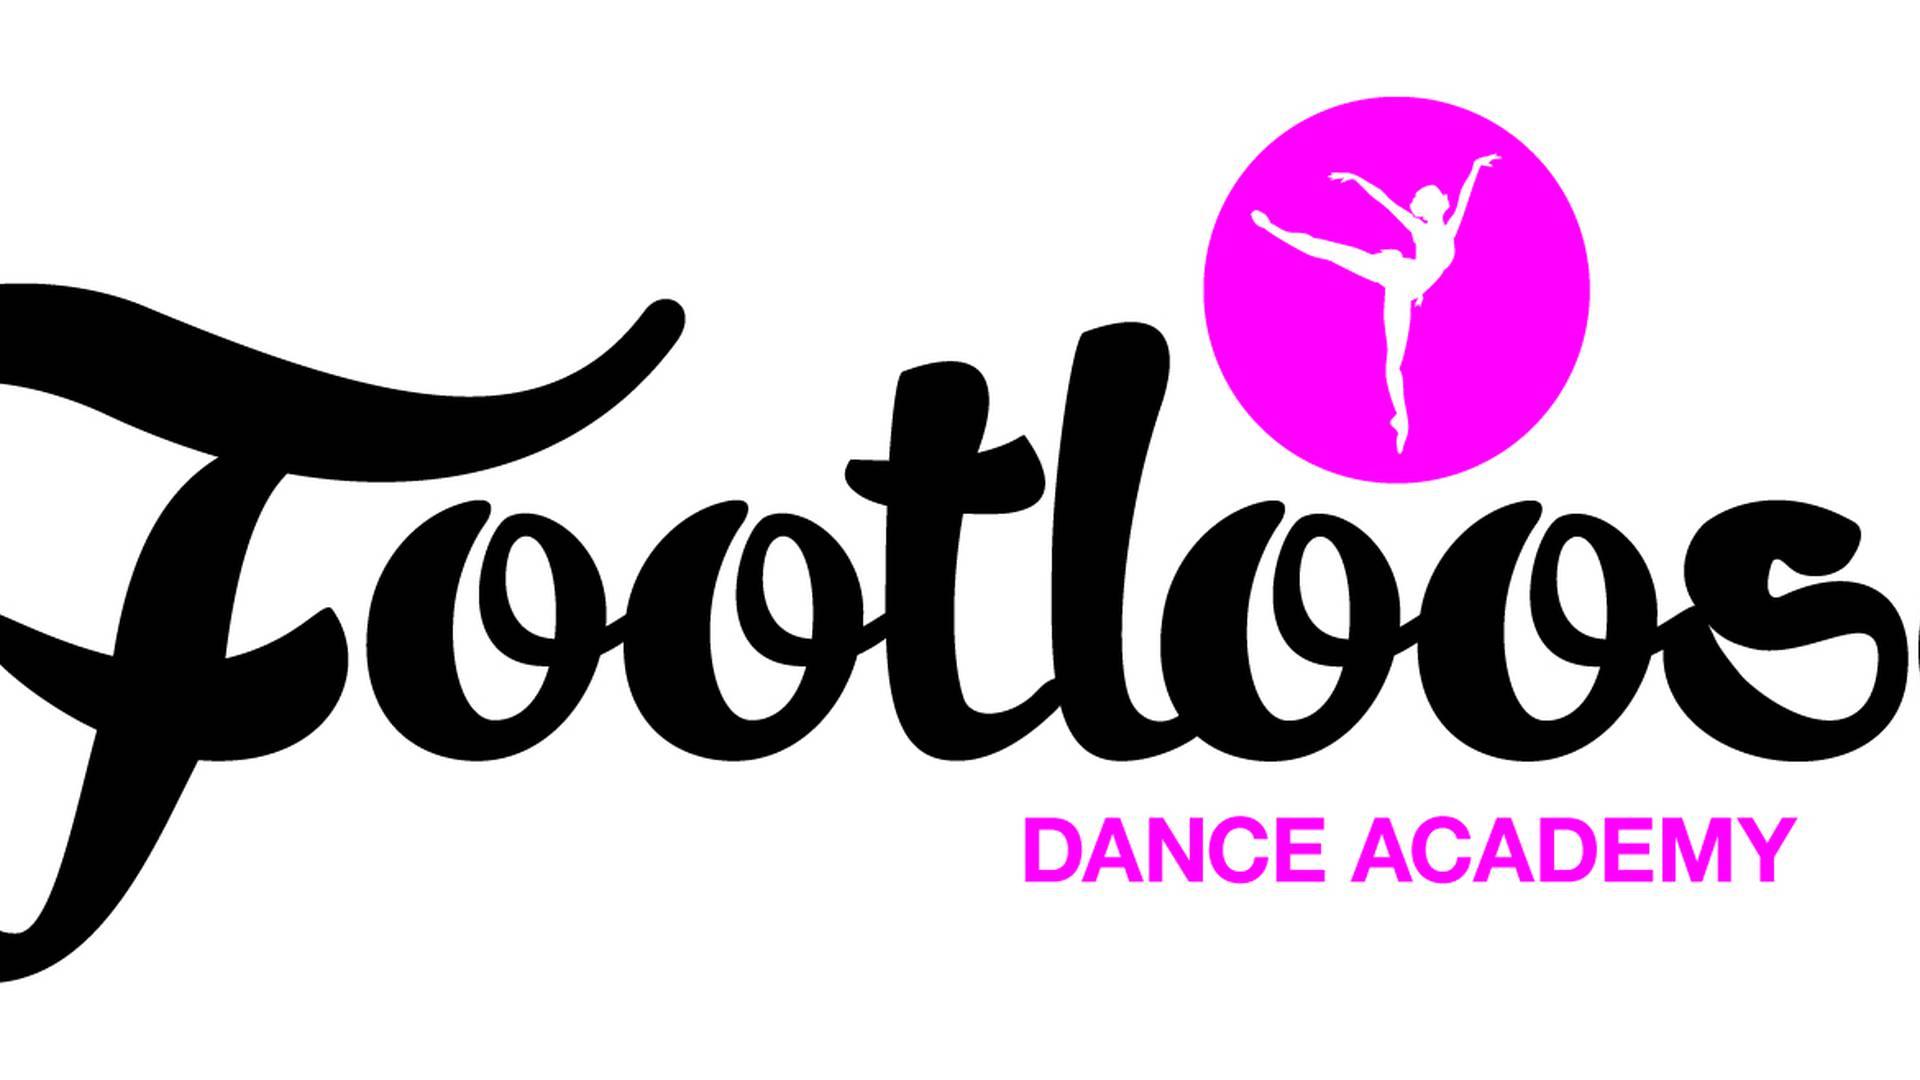 Footloose Dance Academy photo